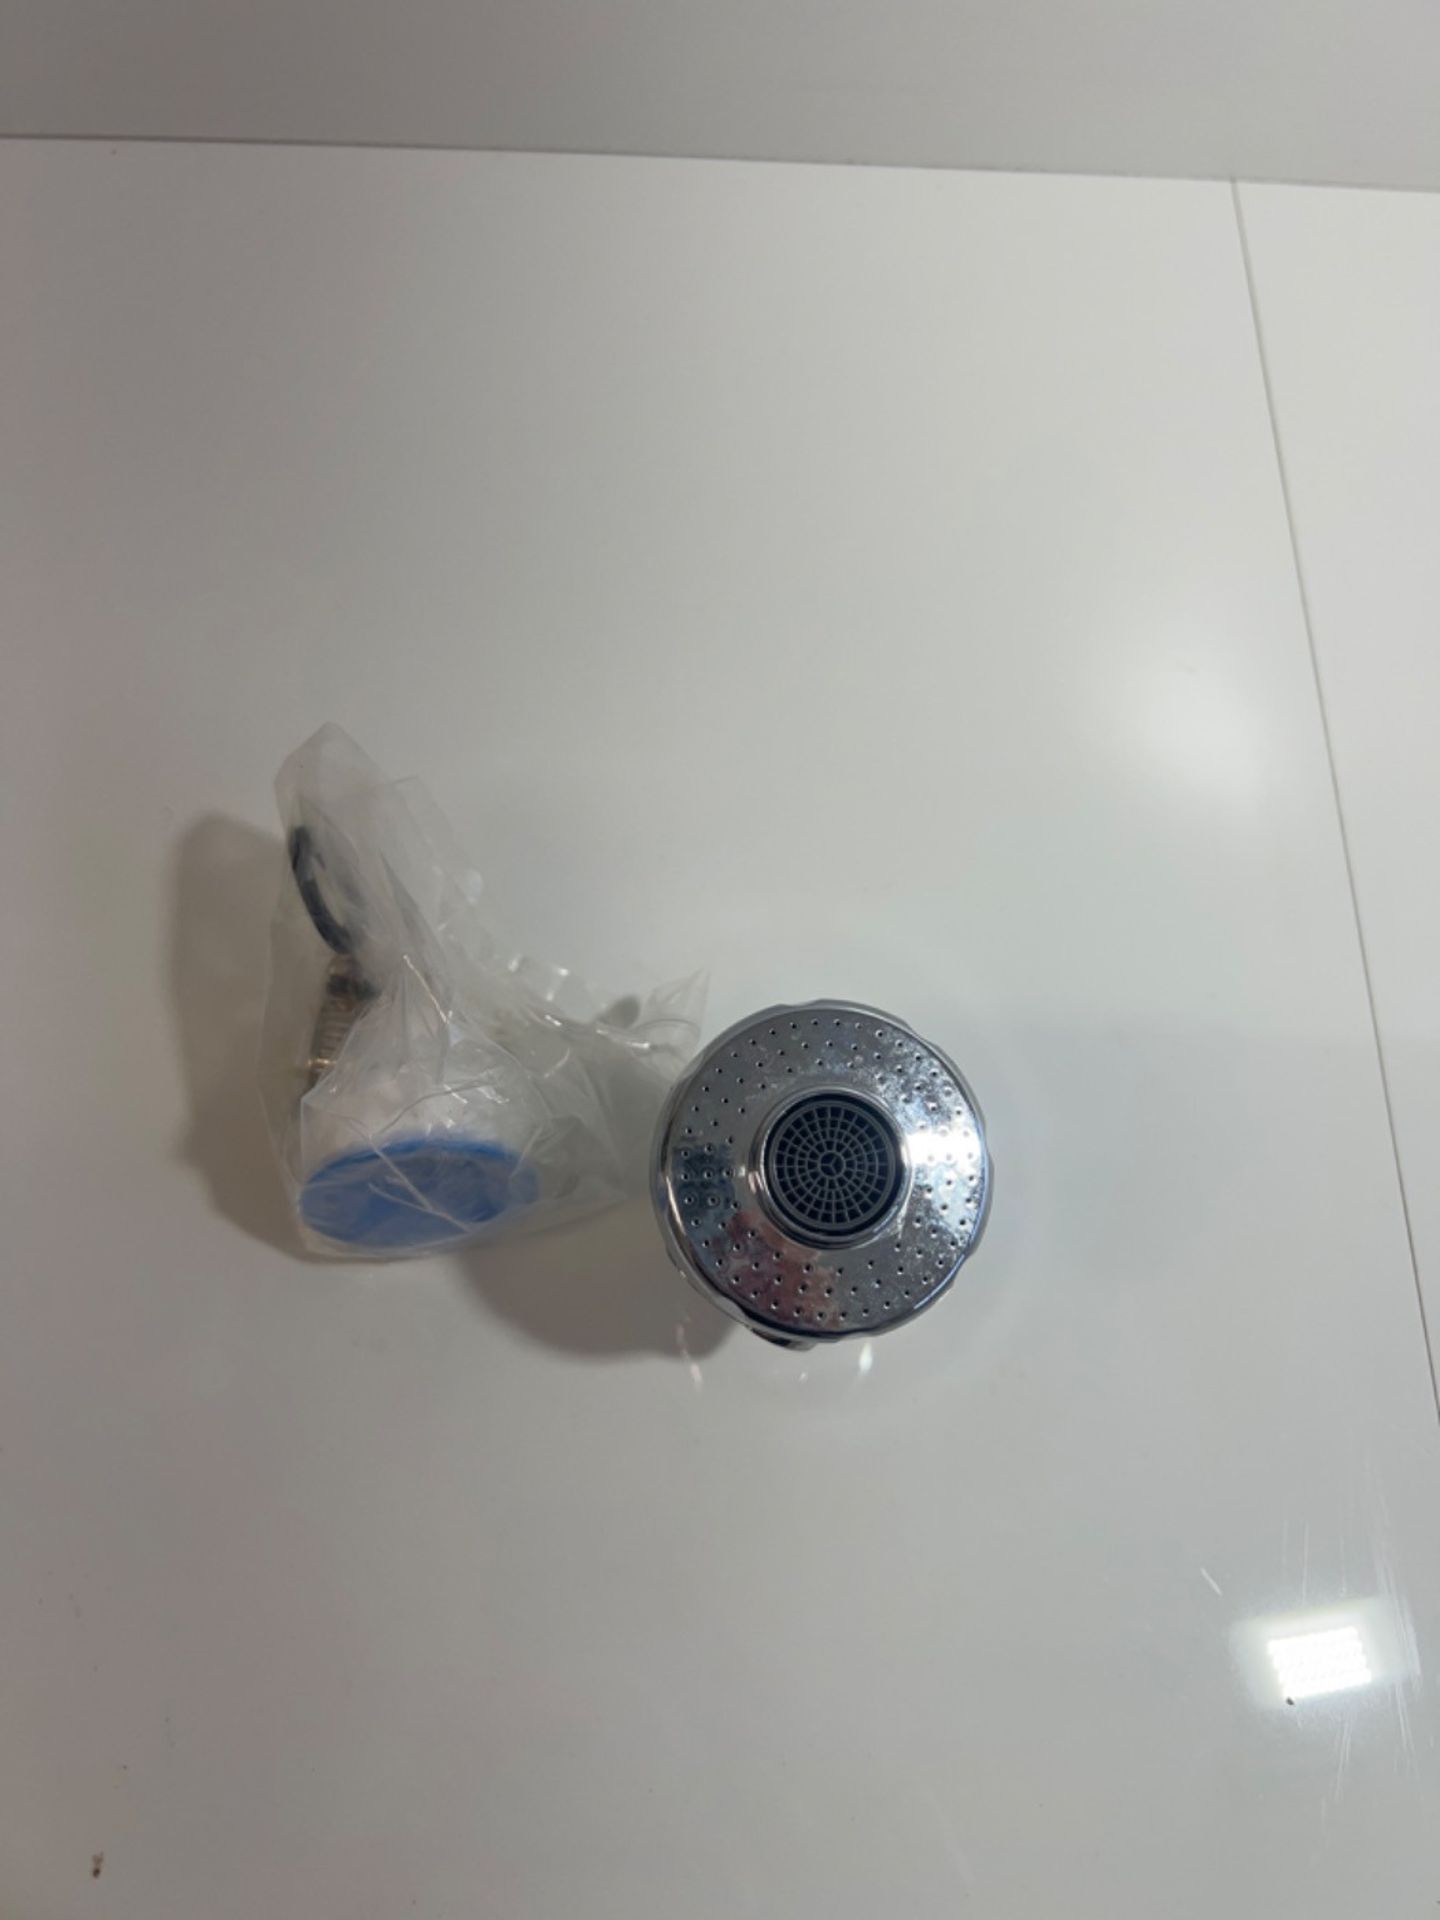 Vinabo Filtro Rubinetto Rocker Tap, 360Â° Swivel Sink, Bubbler Aerator, Water Saving Faucet Filte - Image 3 of 3